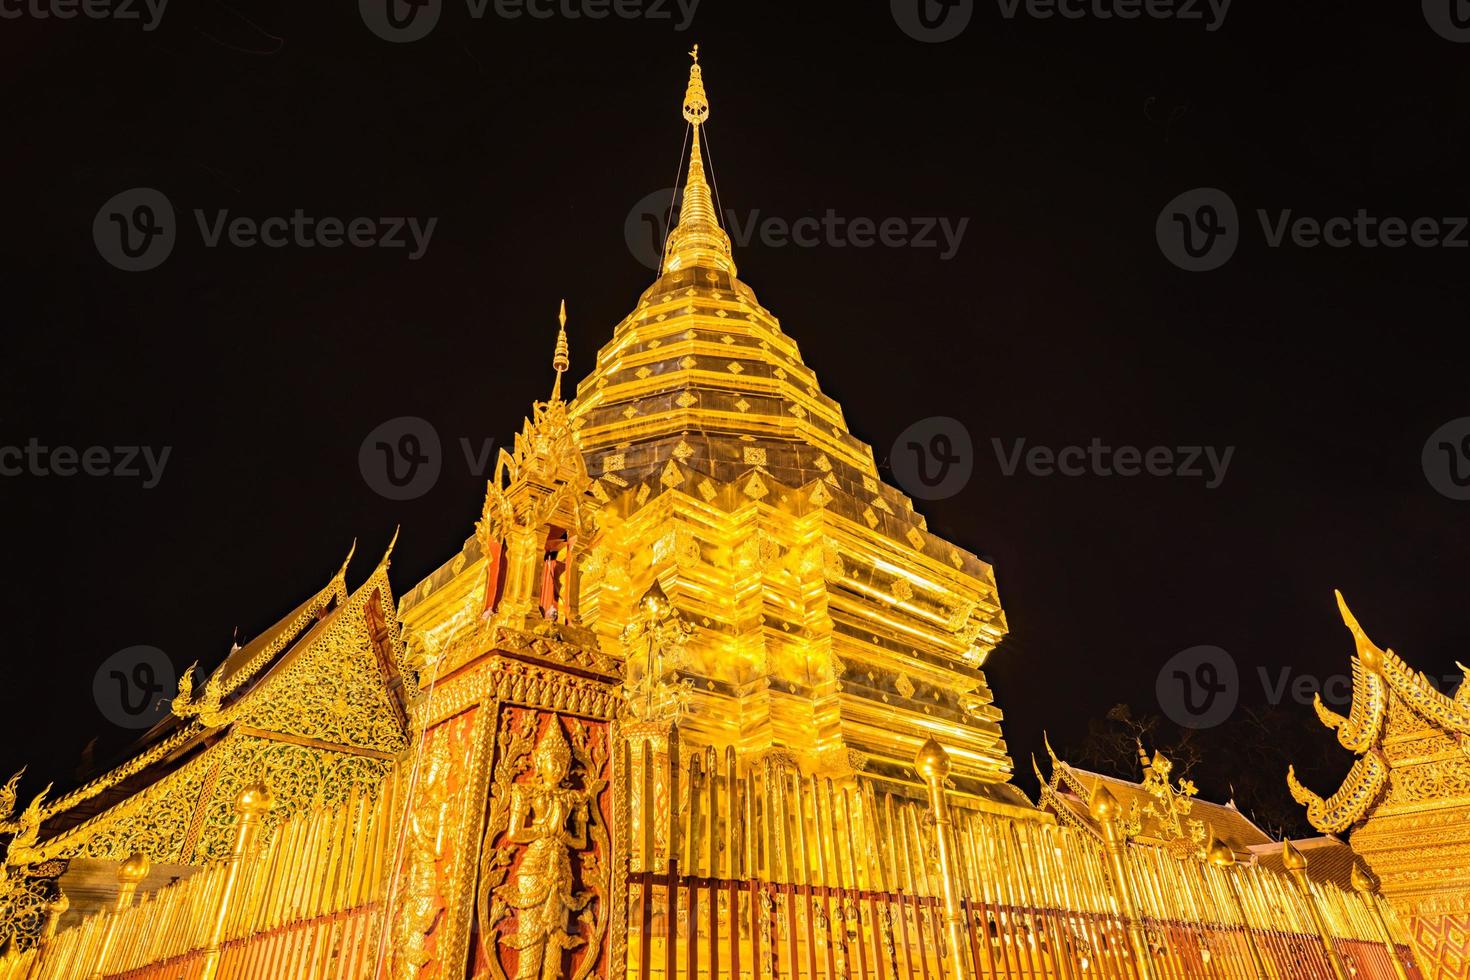 Pagoda at Doi Suthep temple. photo